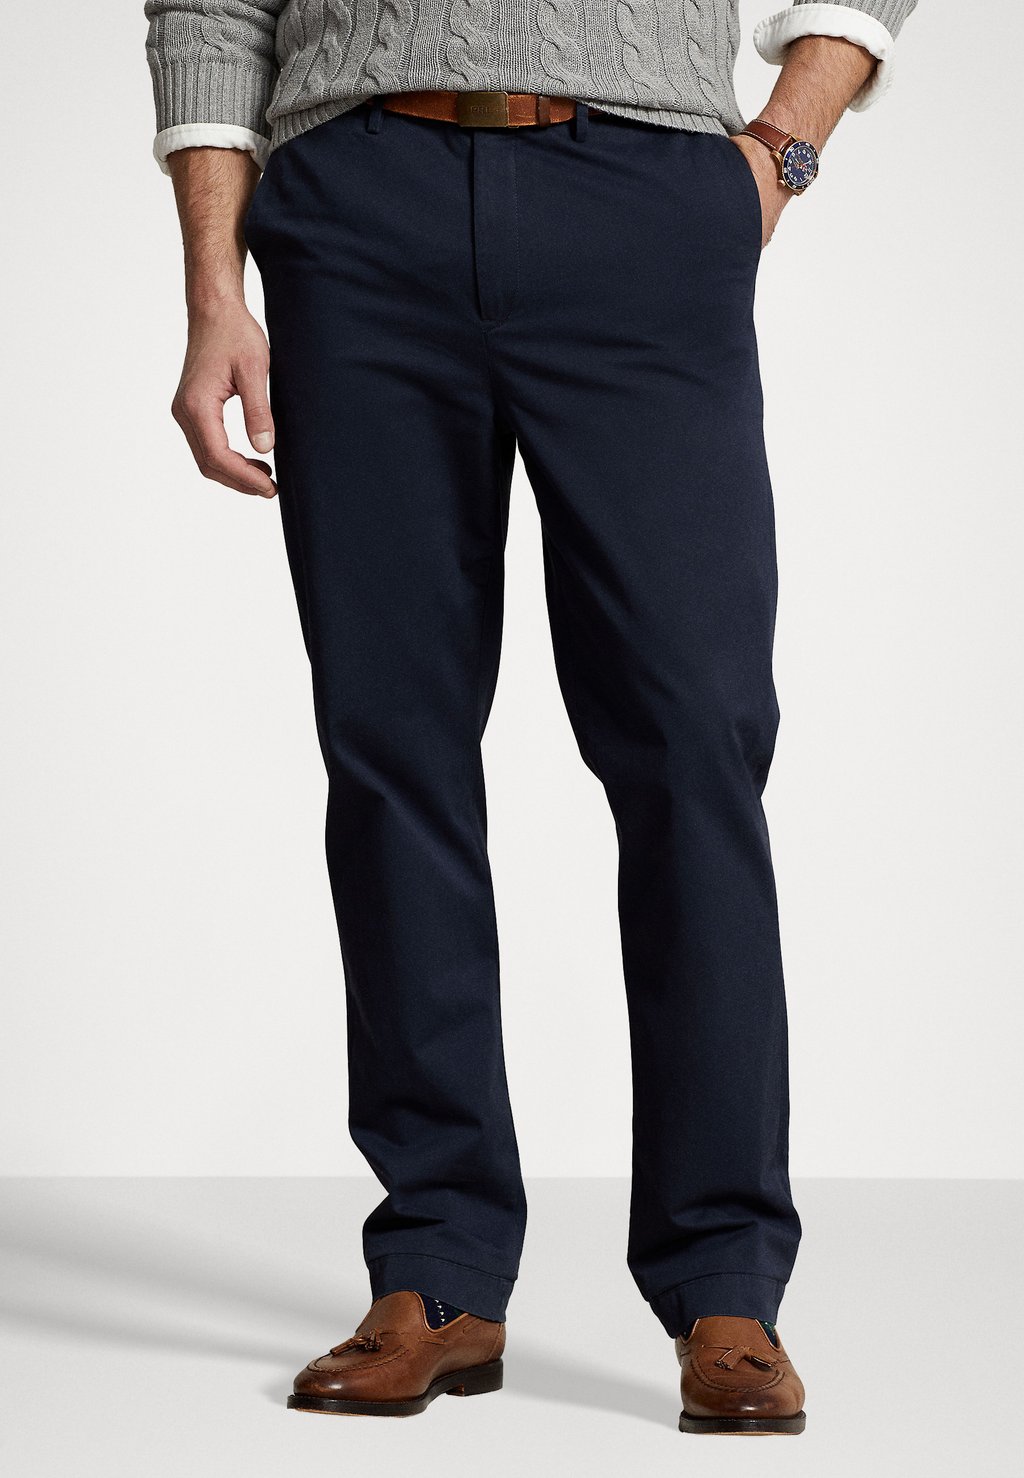 Чинос Polo Ralph Lauren Big & Tall, темно-синий брюки 714844763002 polo ralph lauren темно синий